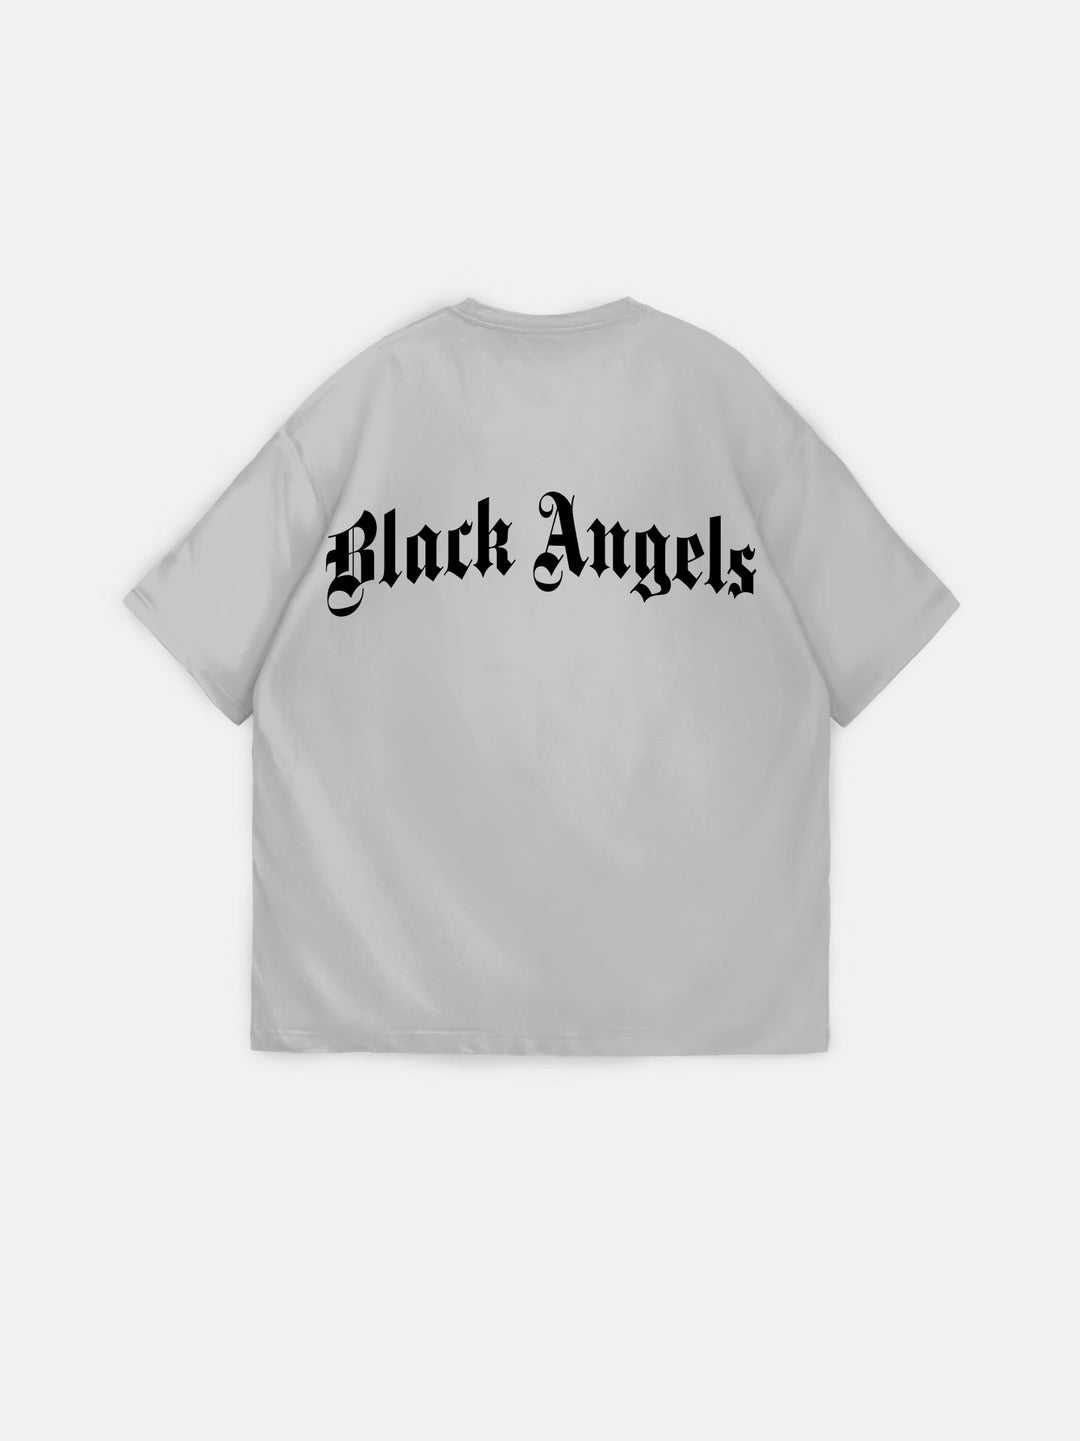 Oversize Black Angels T-Shirt - Grey